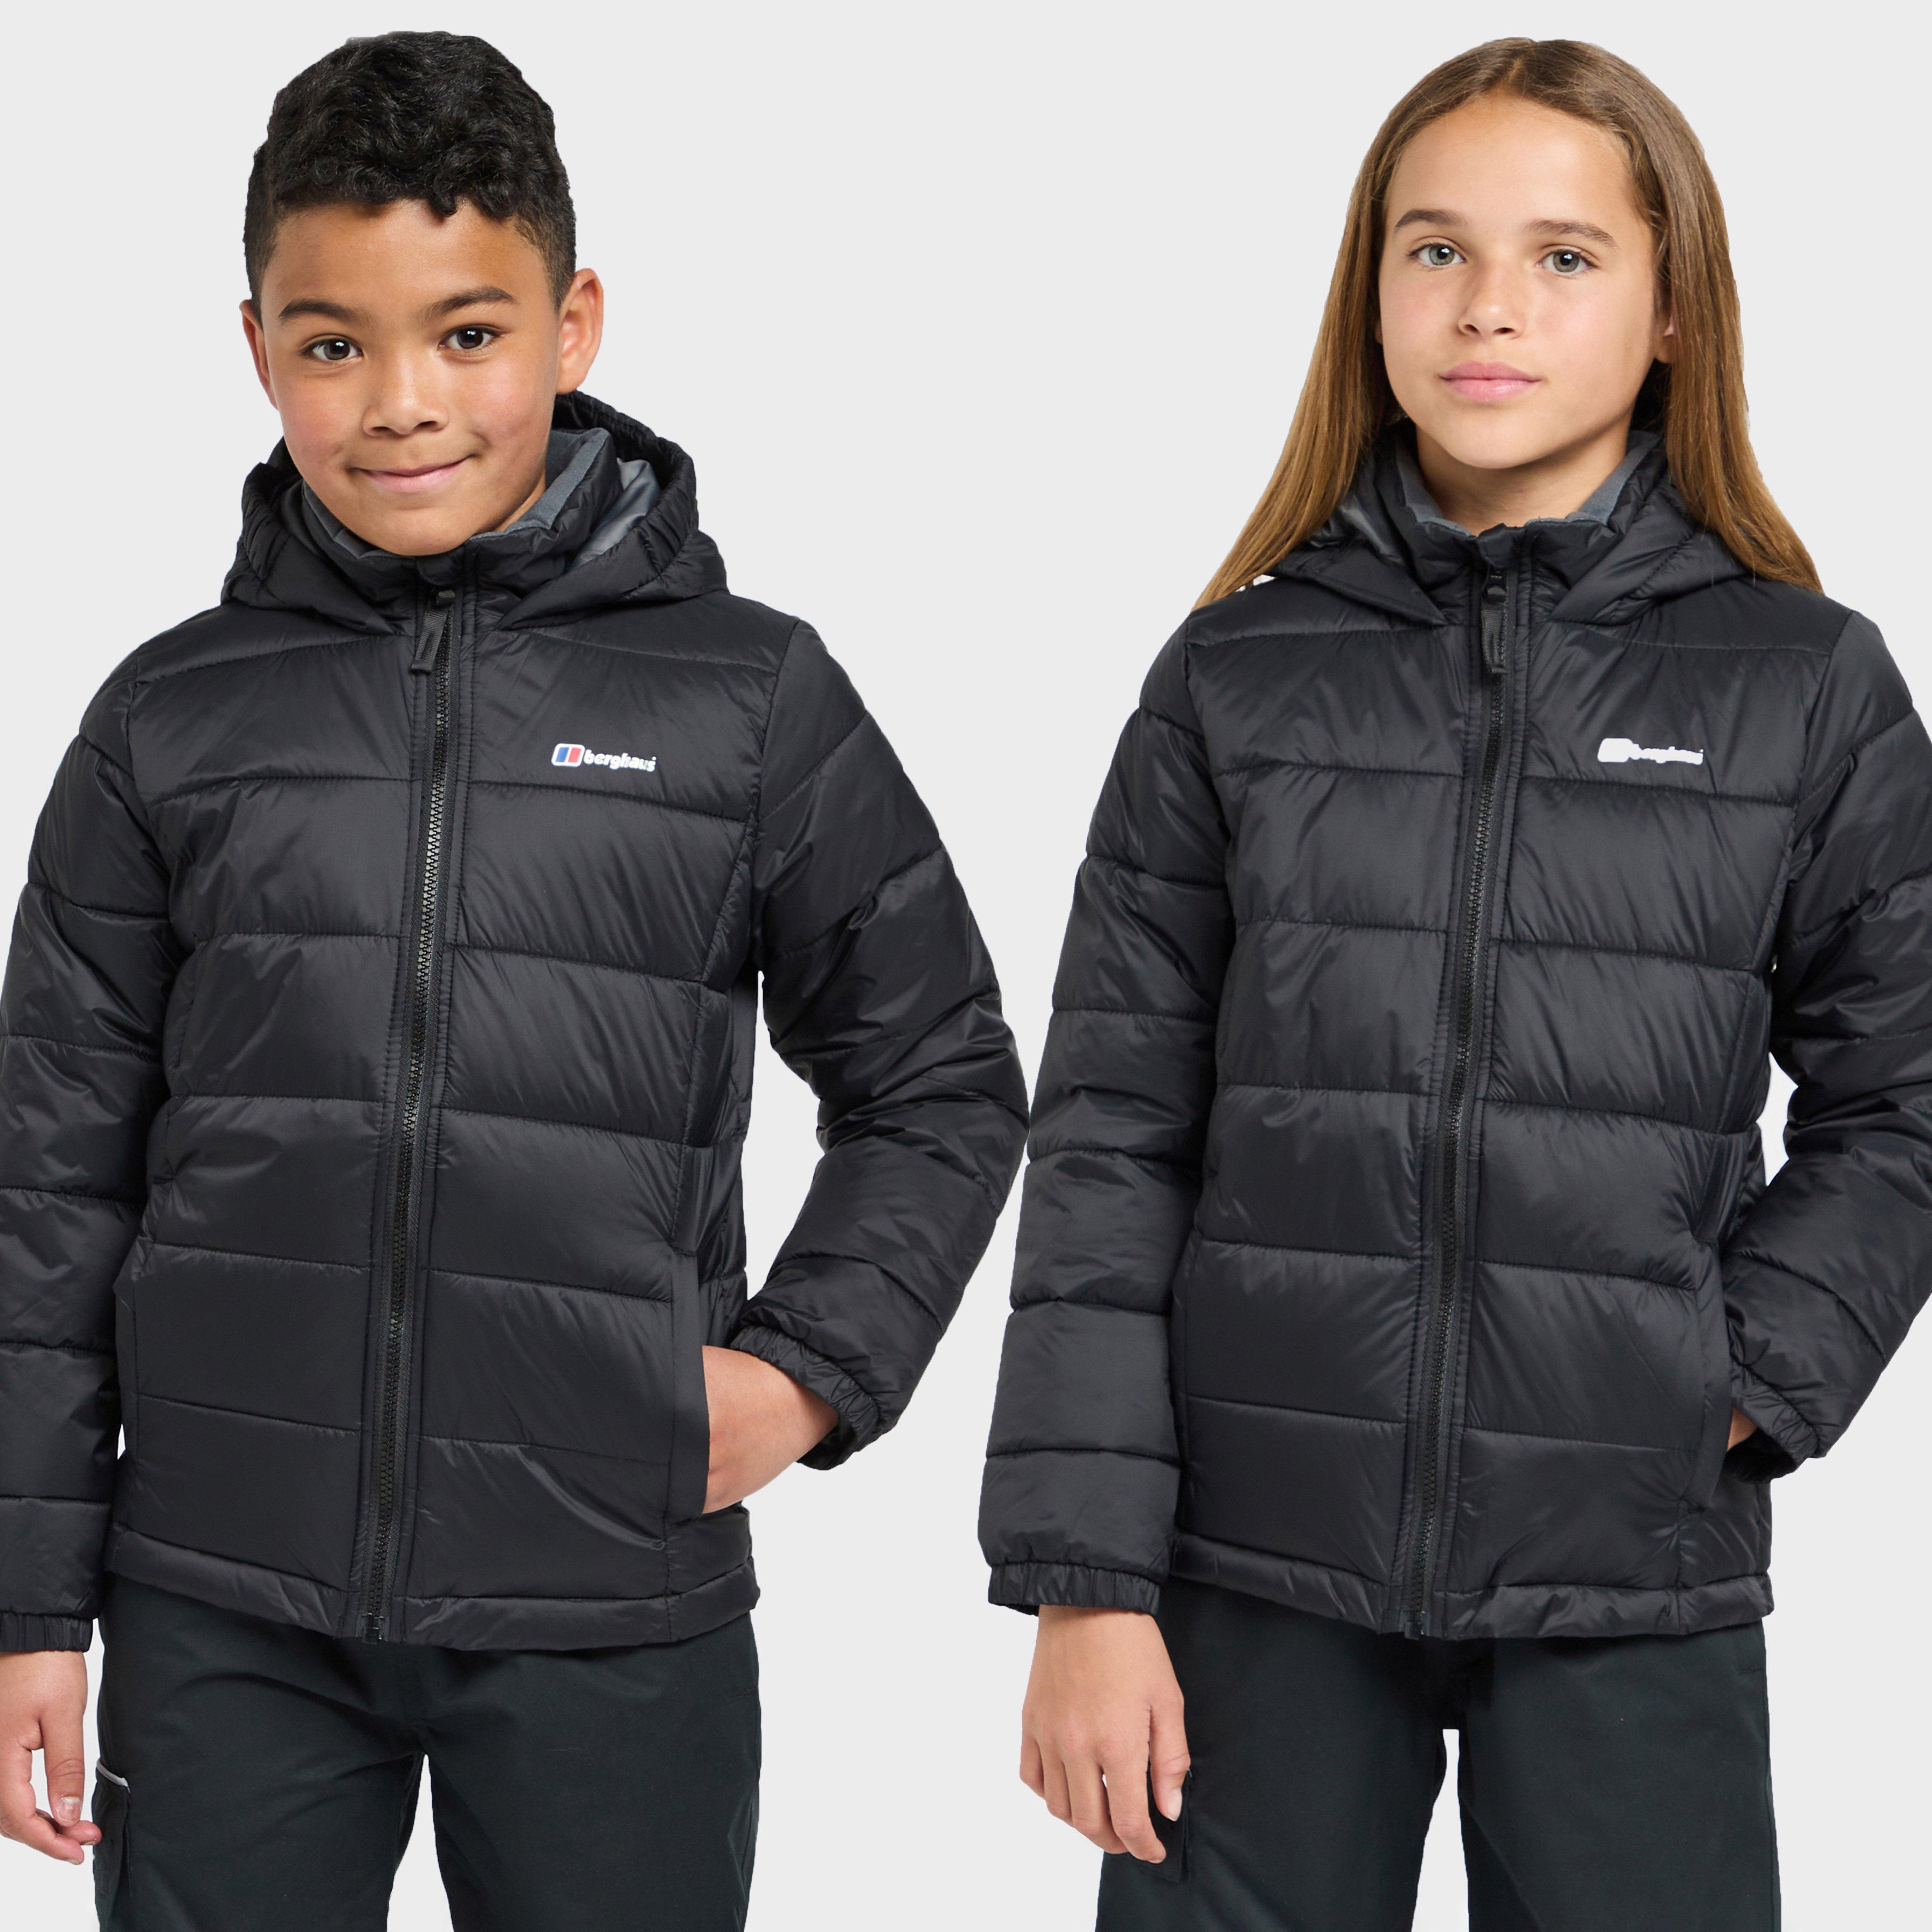 Berghaus Kids Tyndrum Full Zip Fleece Jacket - Black/blk  Black/blk